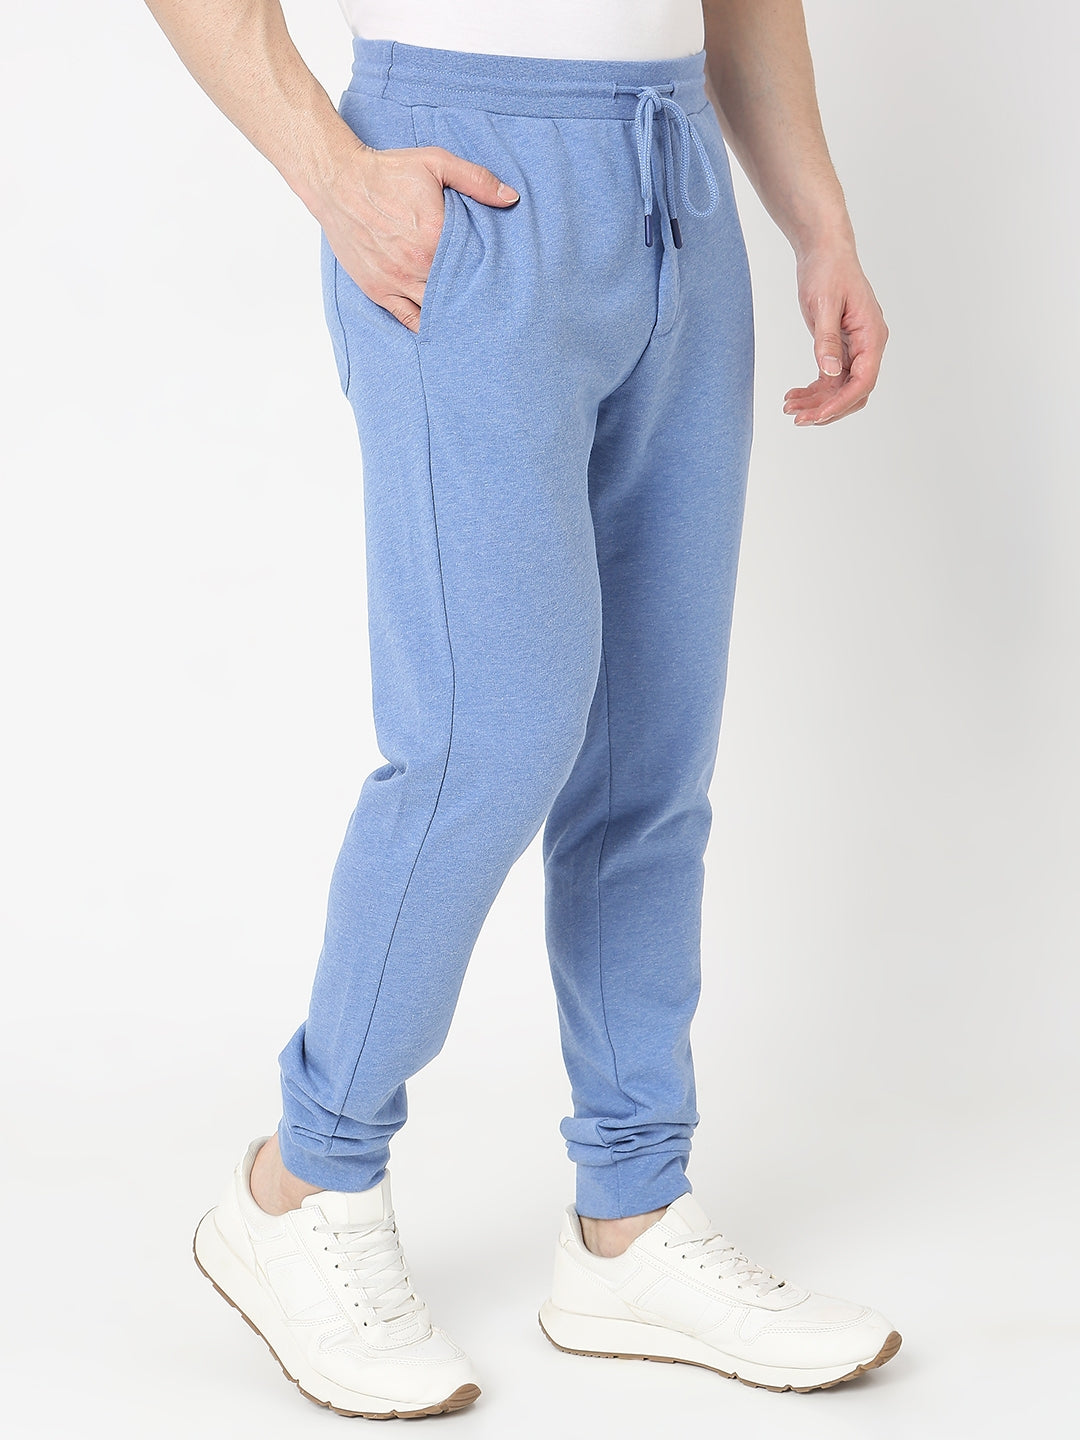 Underjeans by Spykar Men Premium Cotton Blue Melange Pyjama